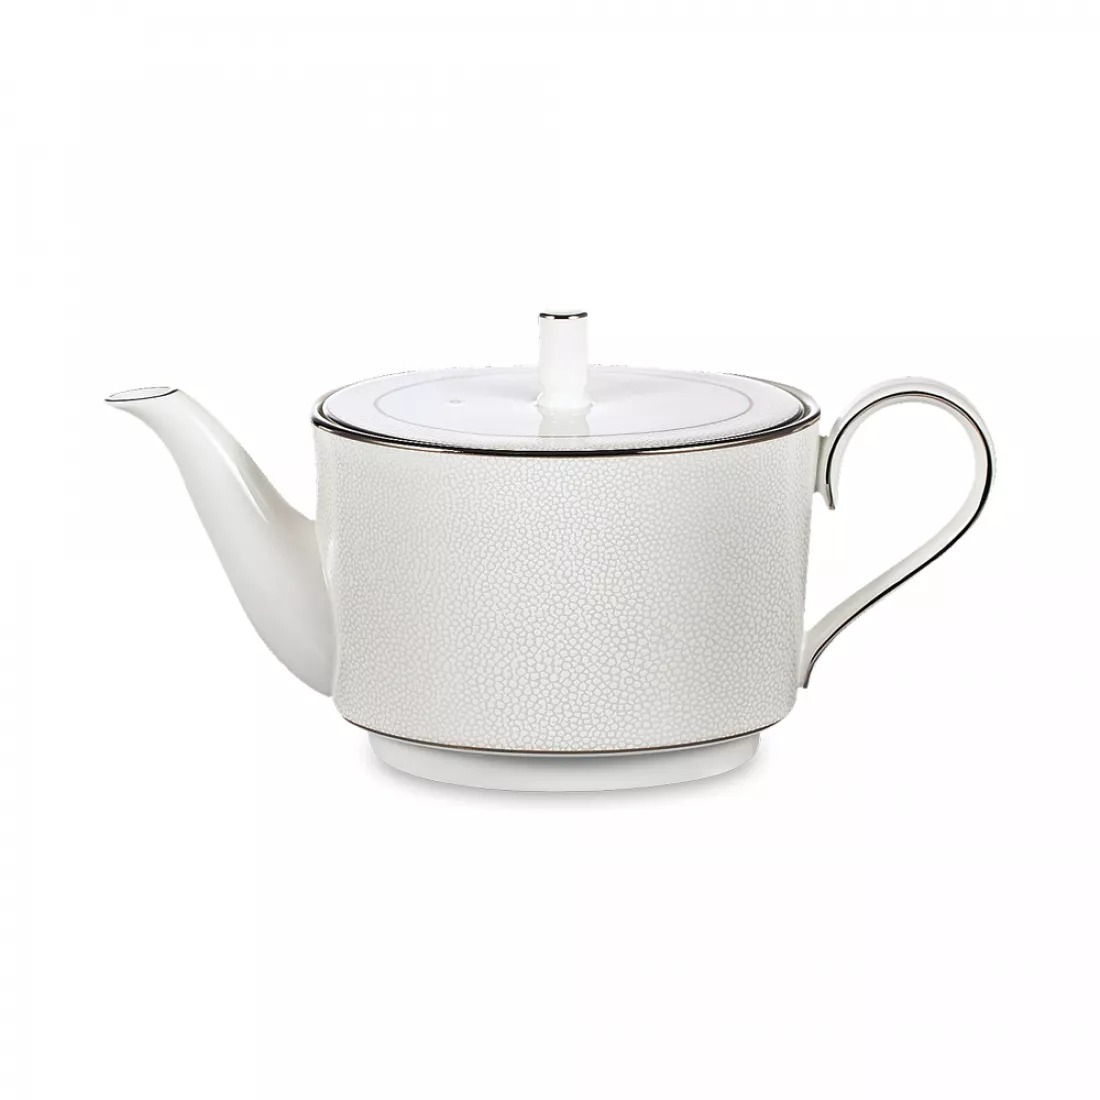 Заварочный чайник Narumi Белый жемчуг 900 мл заварочный чайник сирма белый фарфор